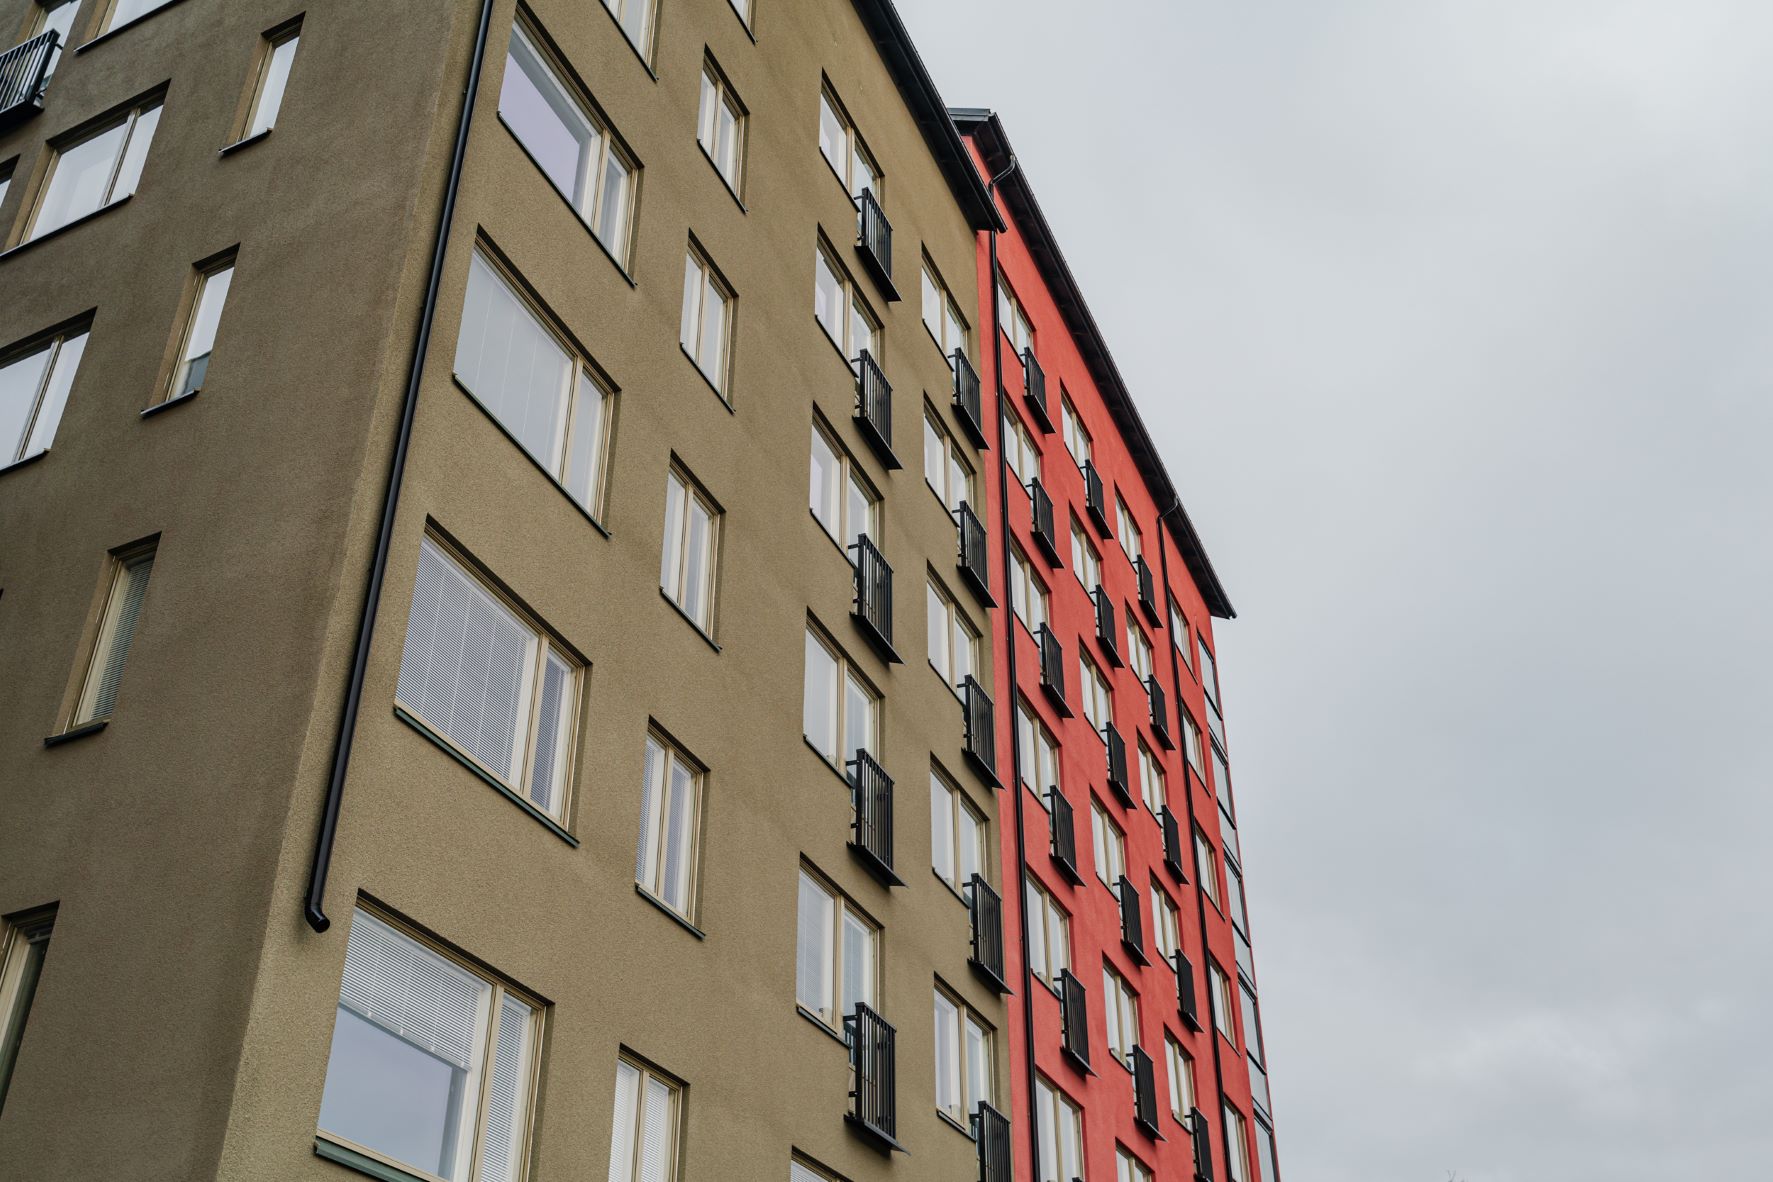 Brand new apartments in Kirstinpuisto, Turku | Joo